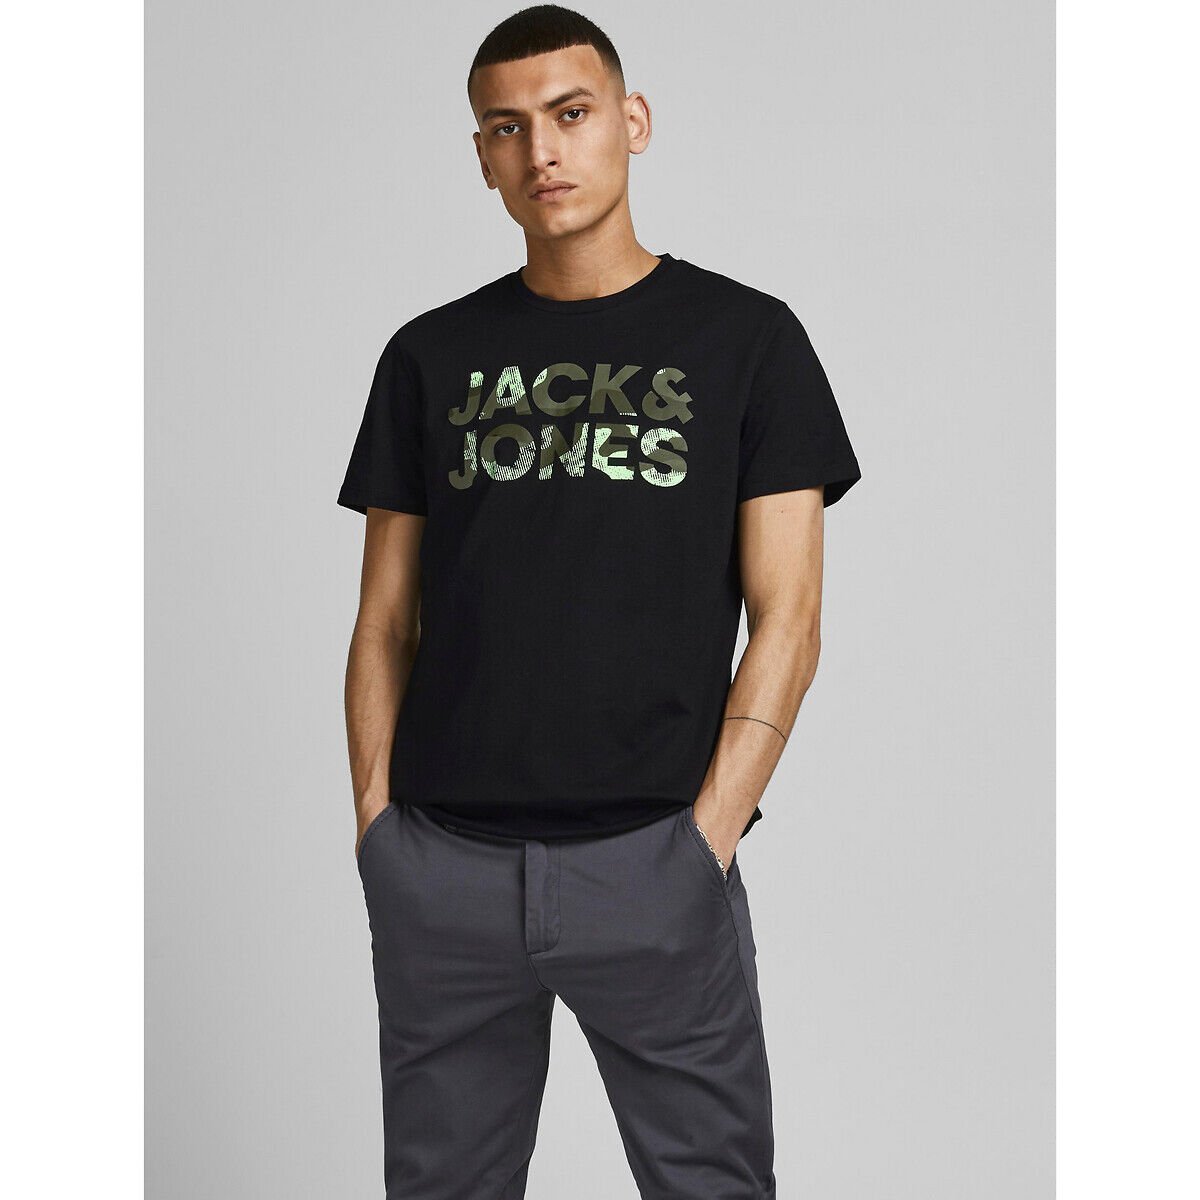 JACK & JONES T-Shirt Soldier, runder Ausschnitt GRAU;SCHWARZ